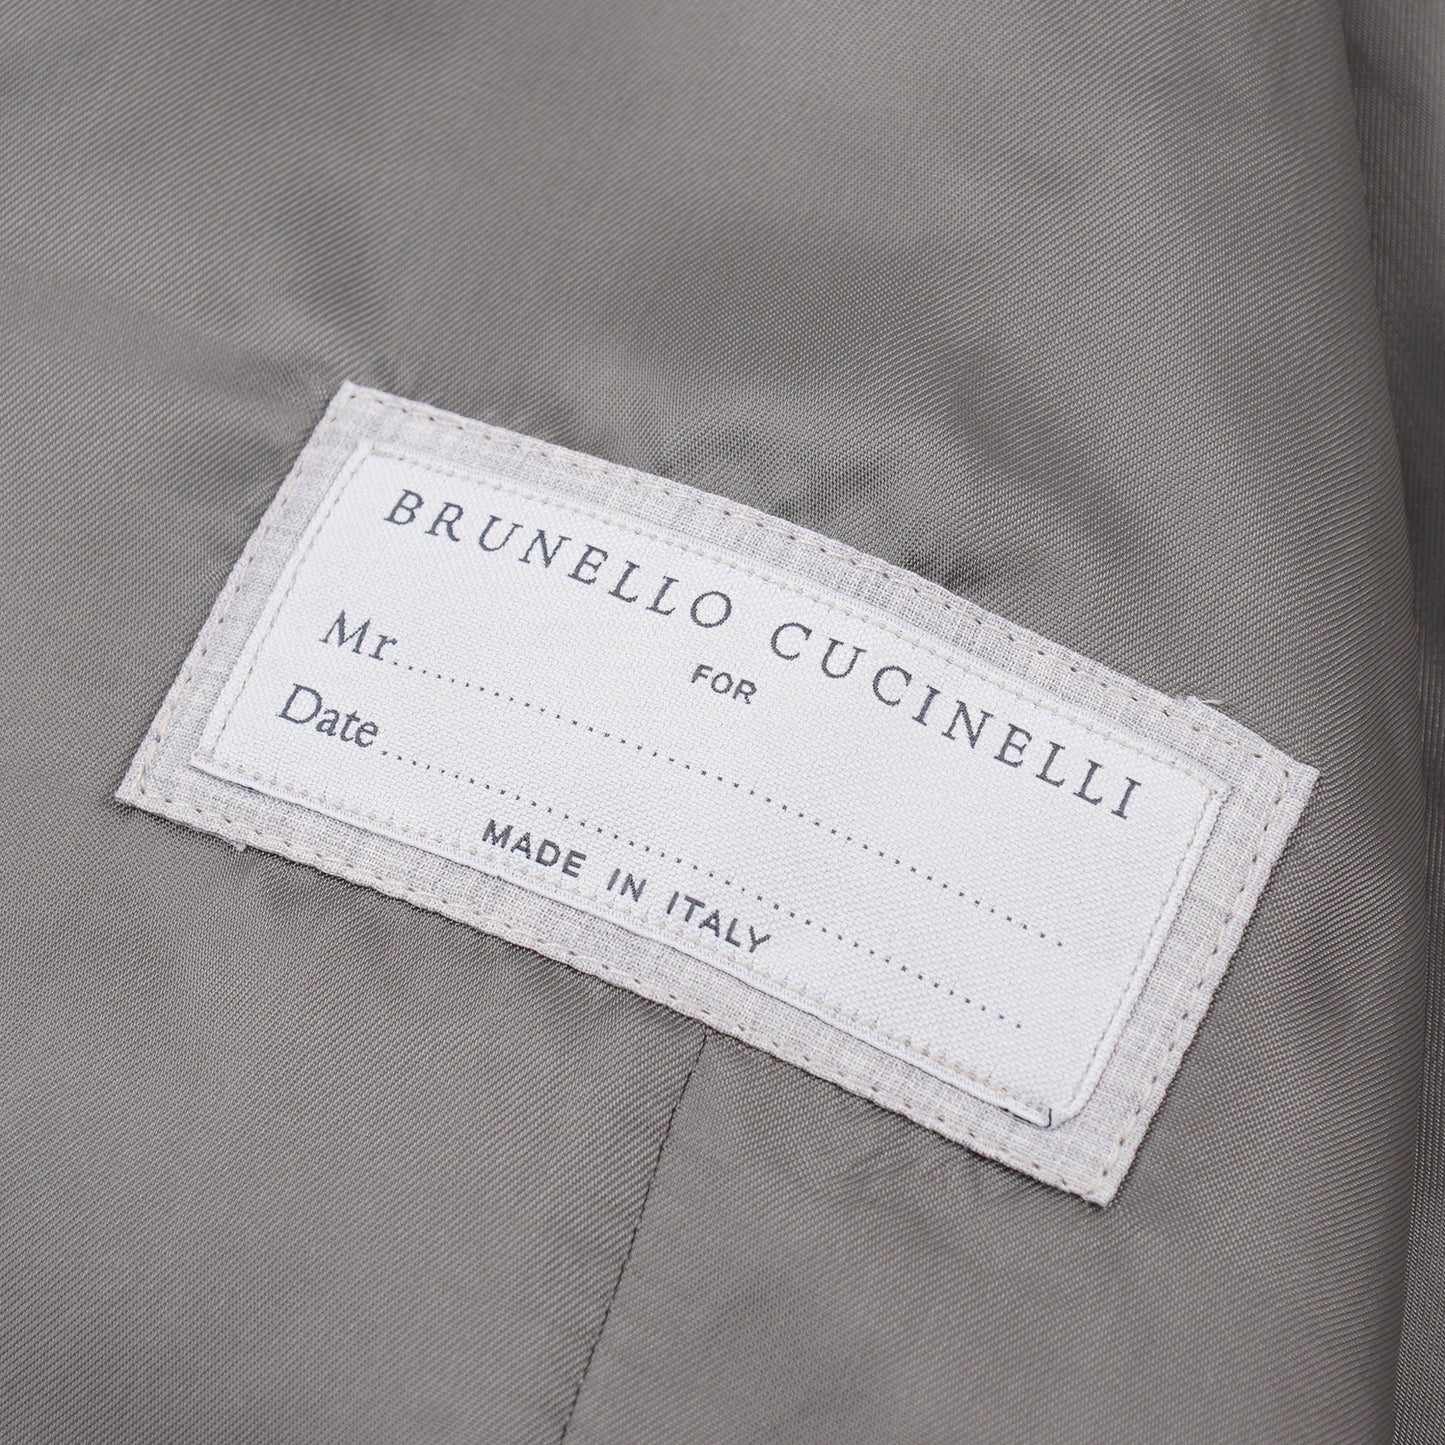 Brunello Cucinelli Glen Plaid Waistcoat - Top Shelf Apparel